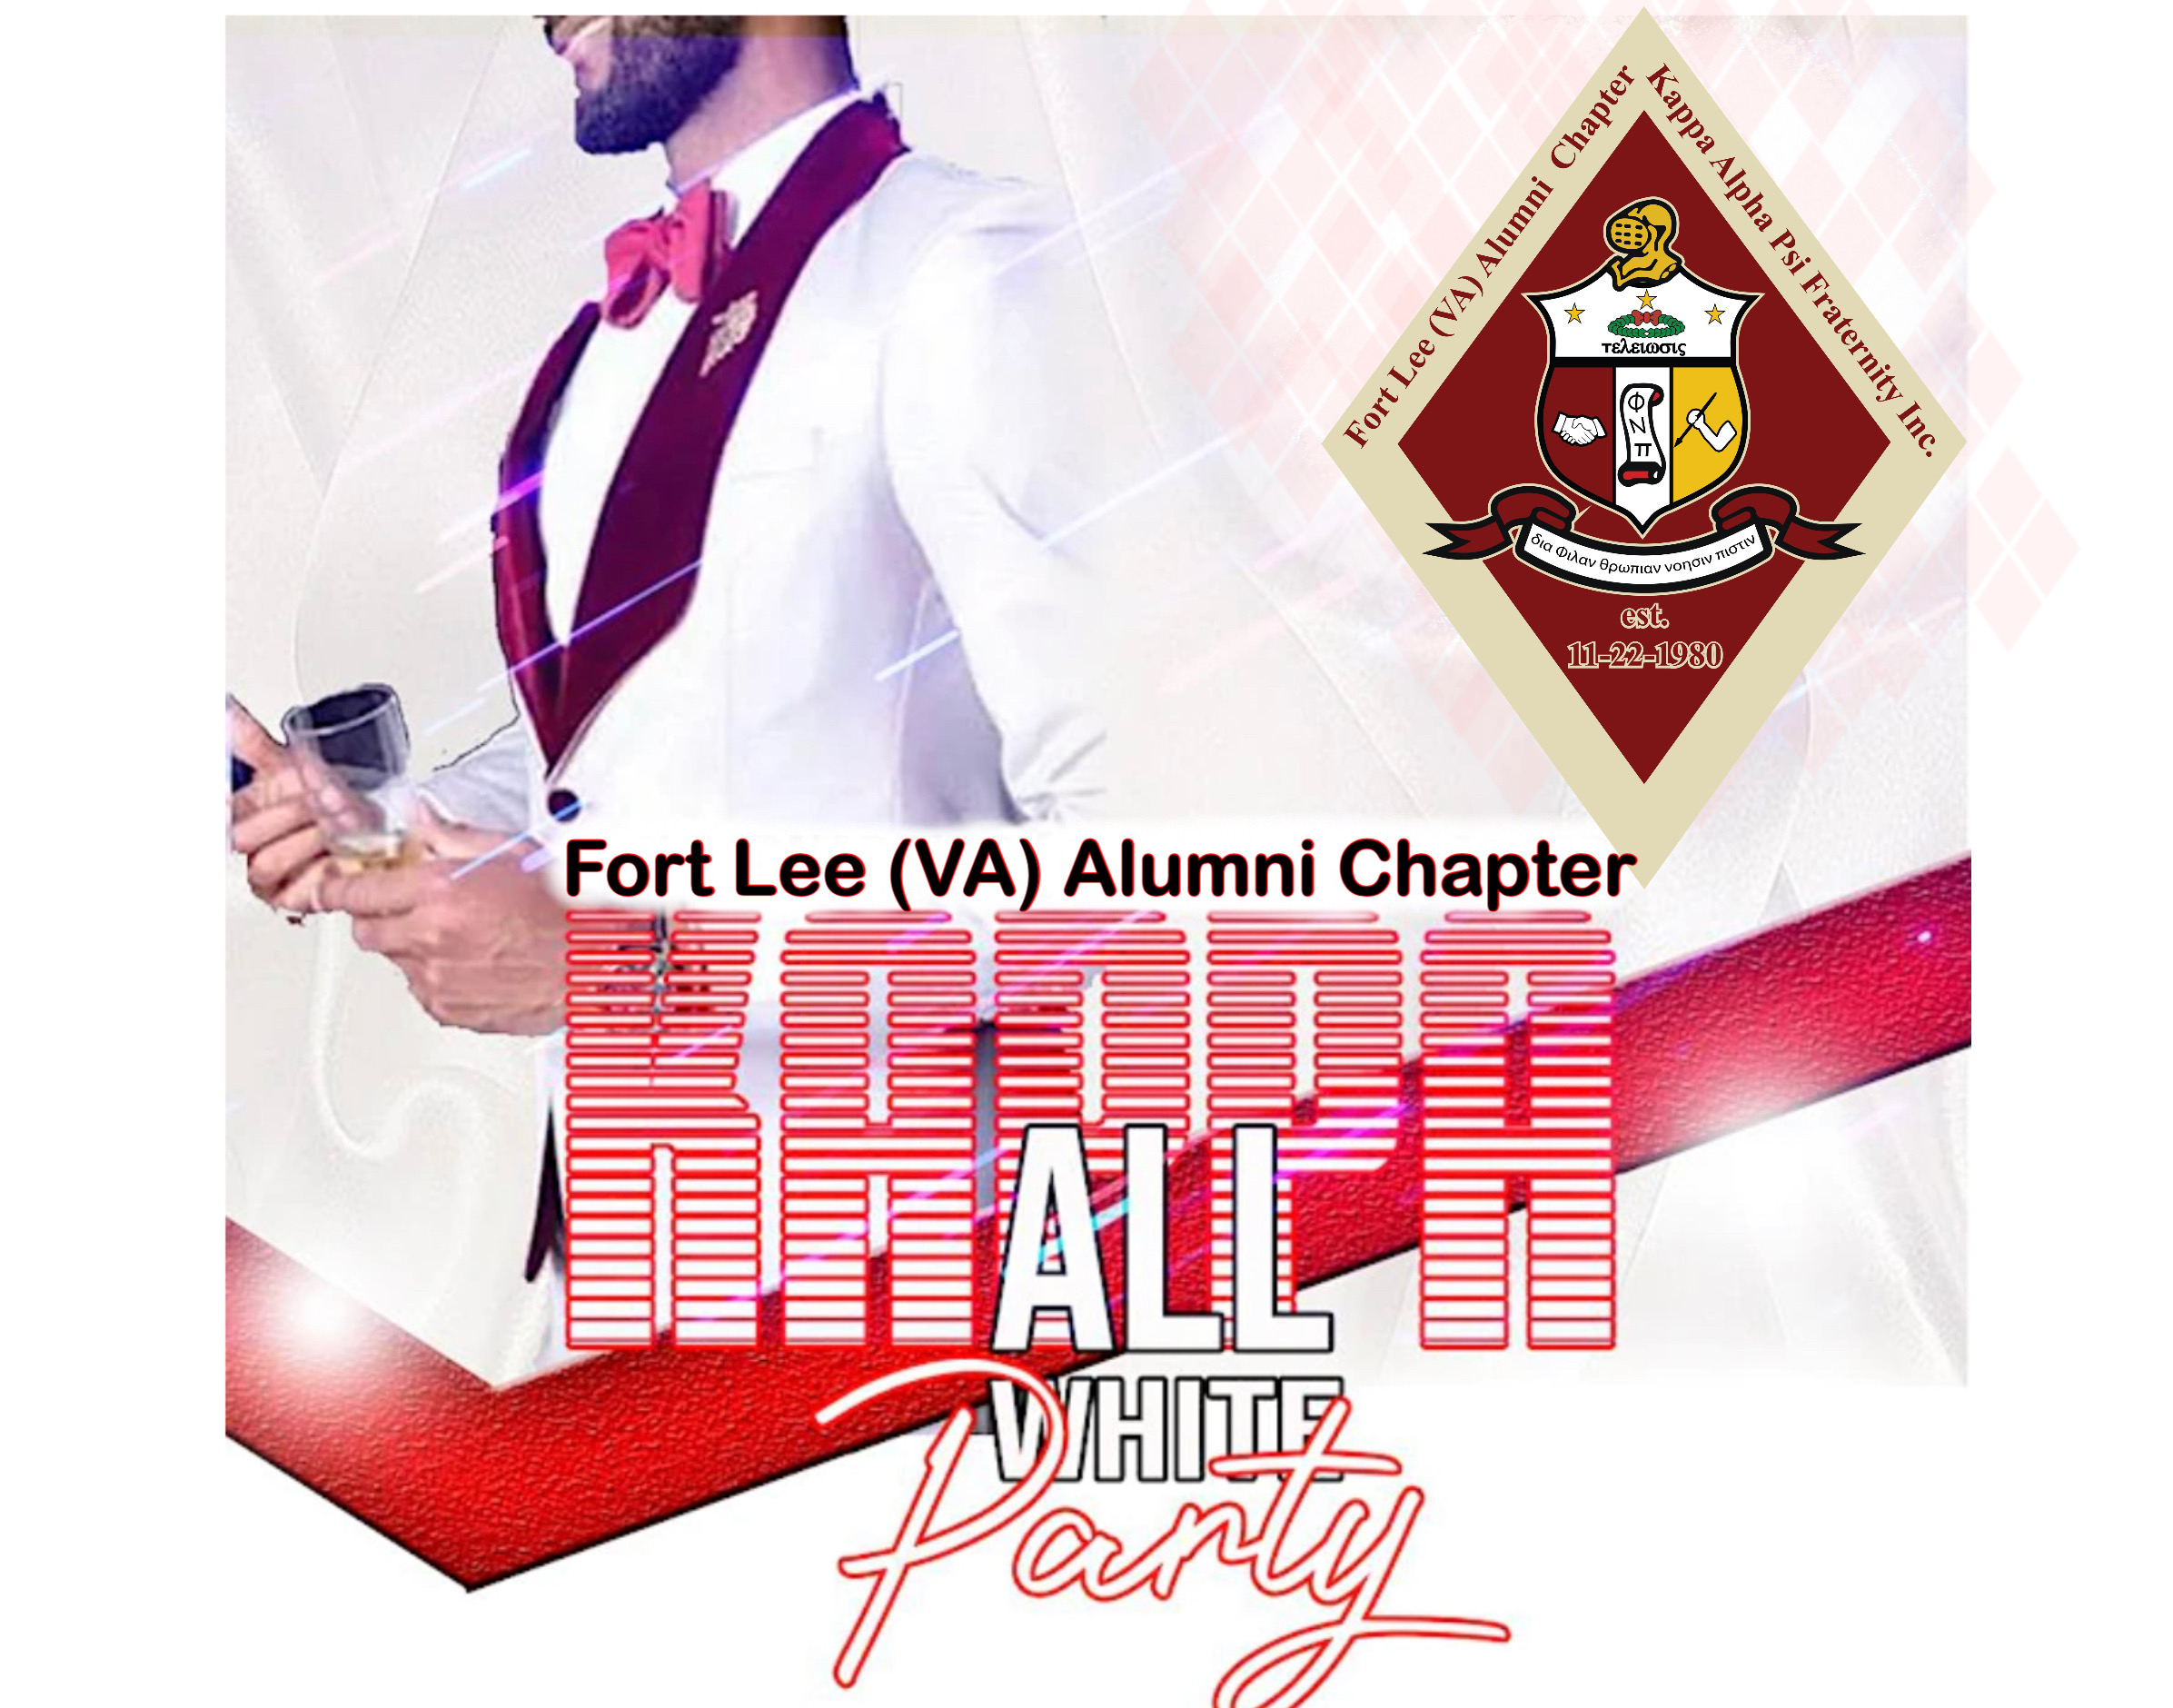 Fort Lee (VA) Alumni